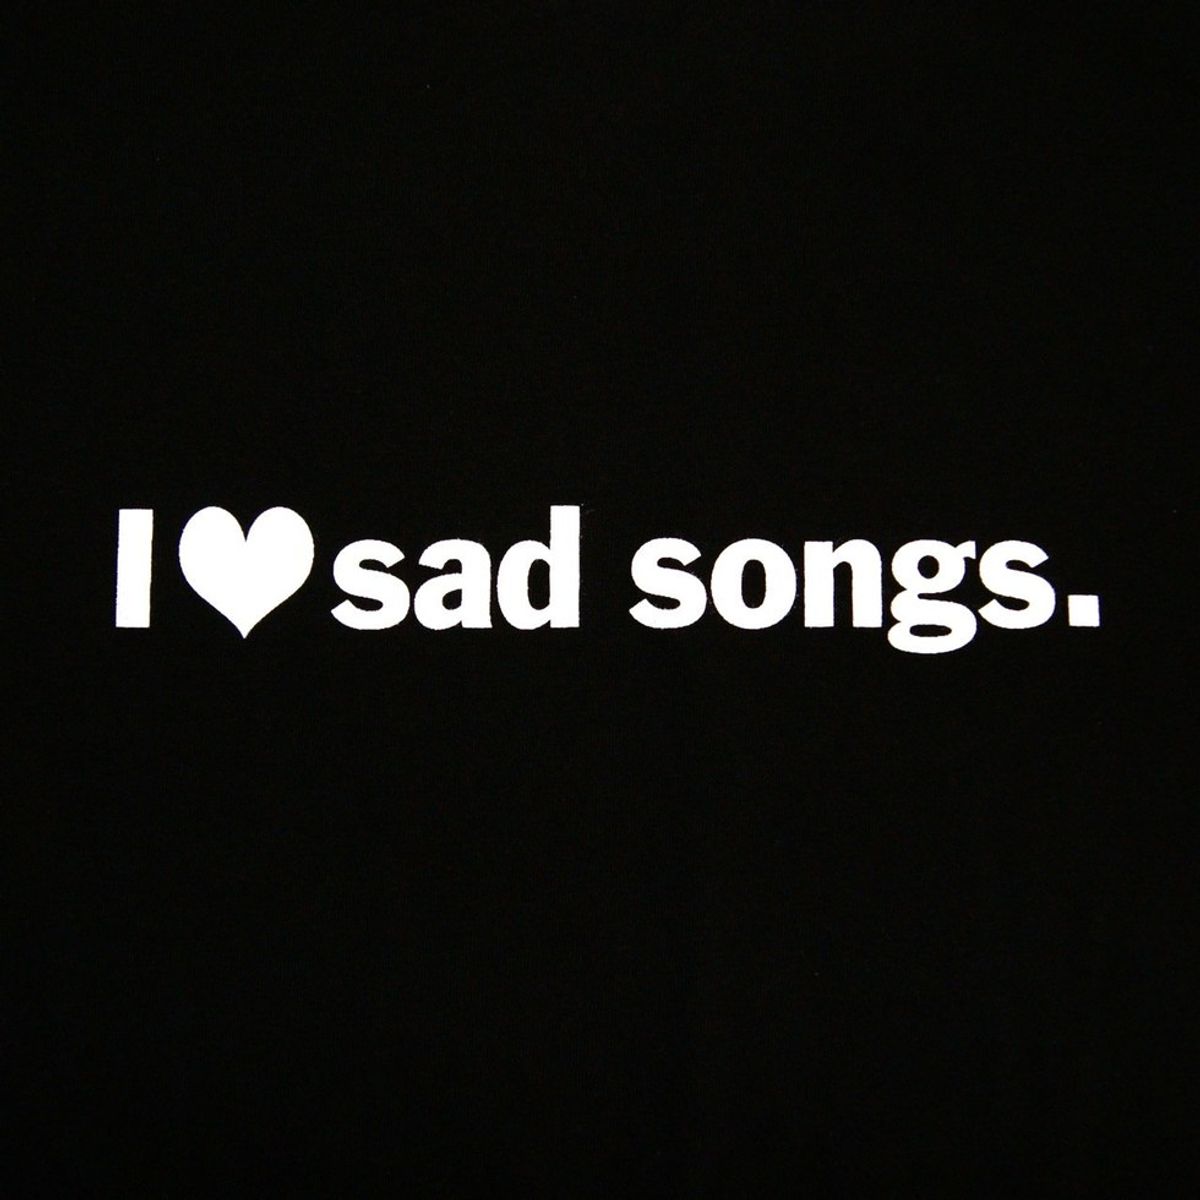 Why I Love Sad Songs